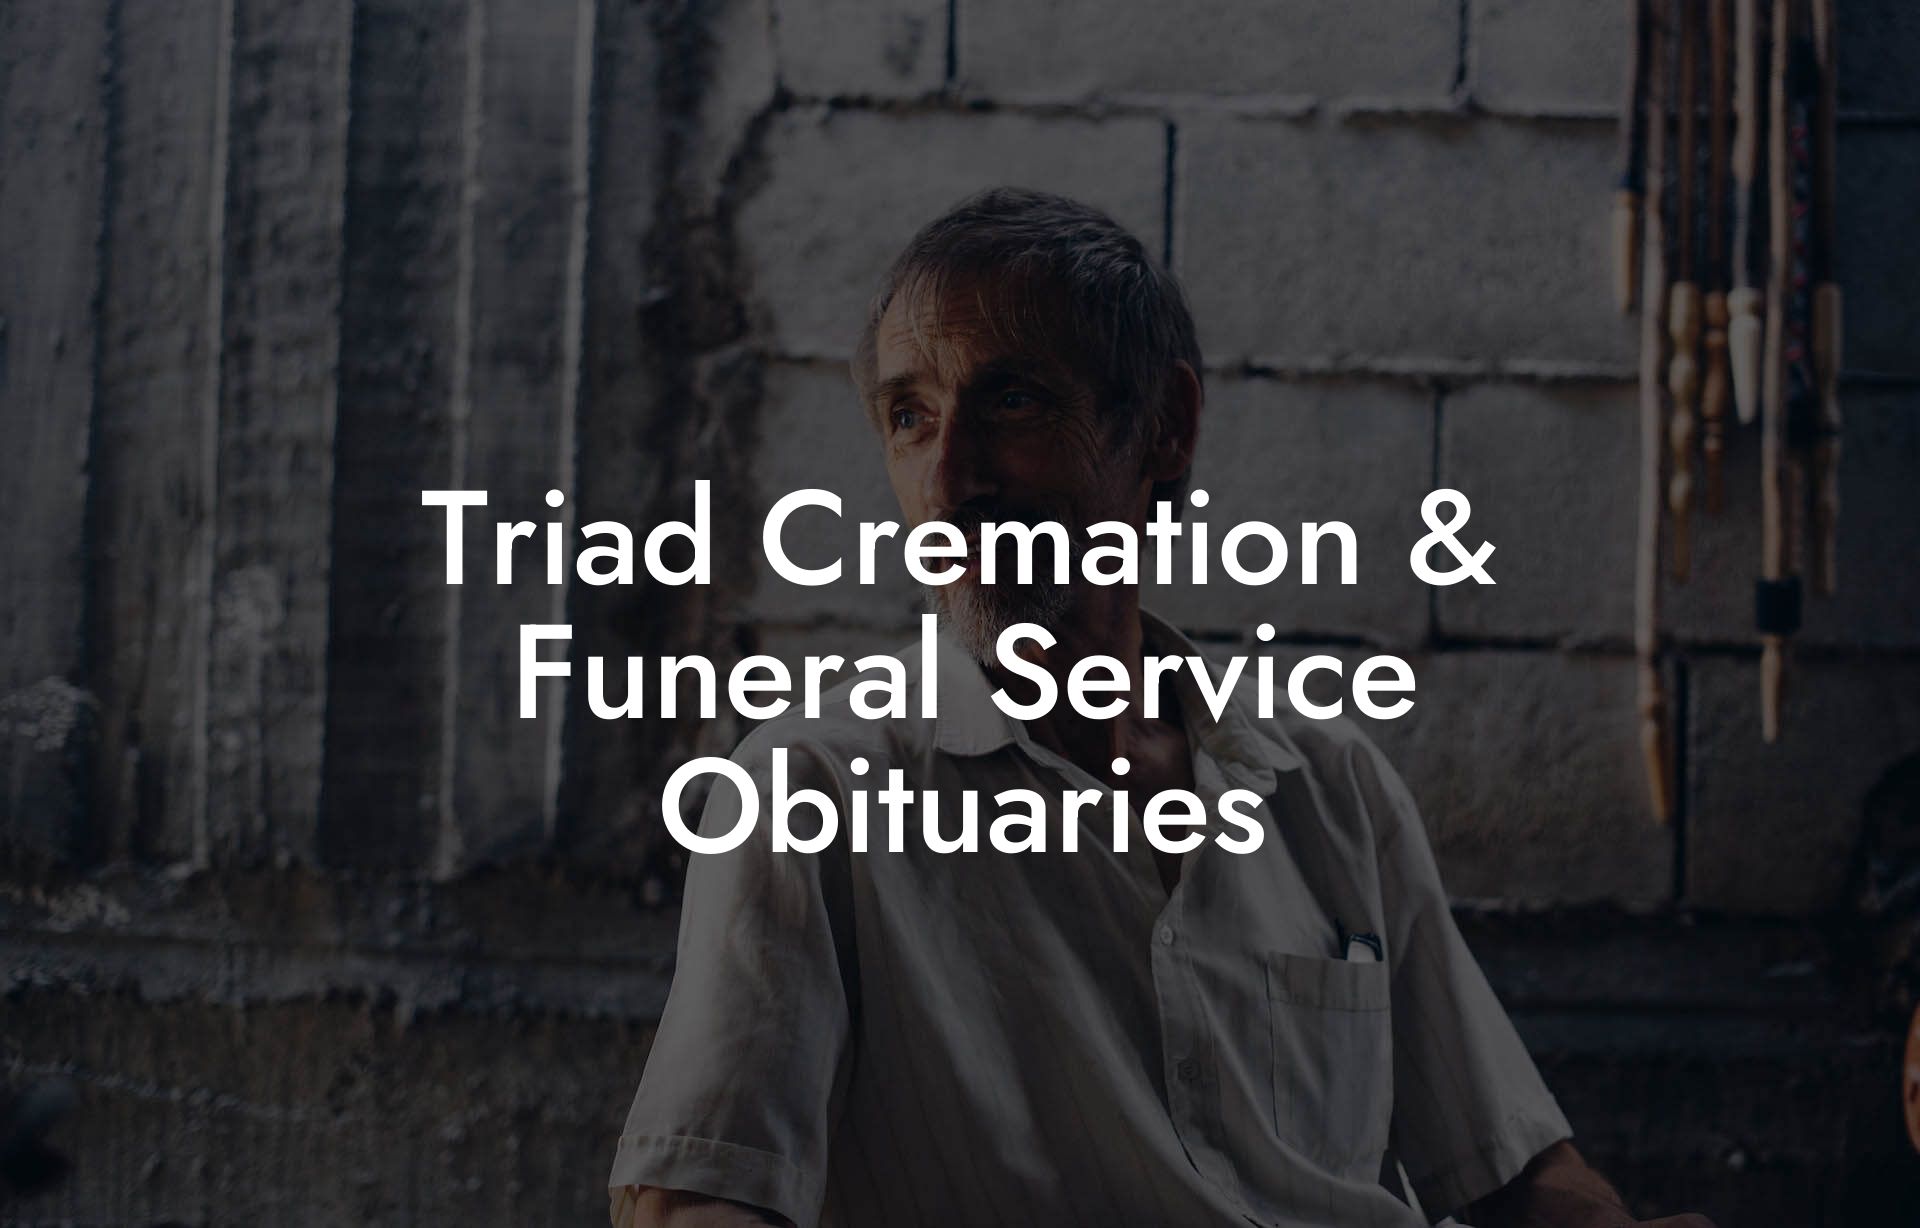 Triad cremation & funeral service obituaries